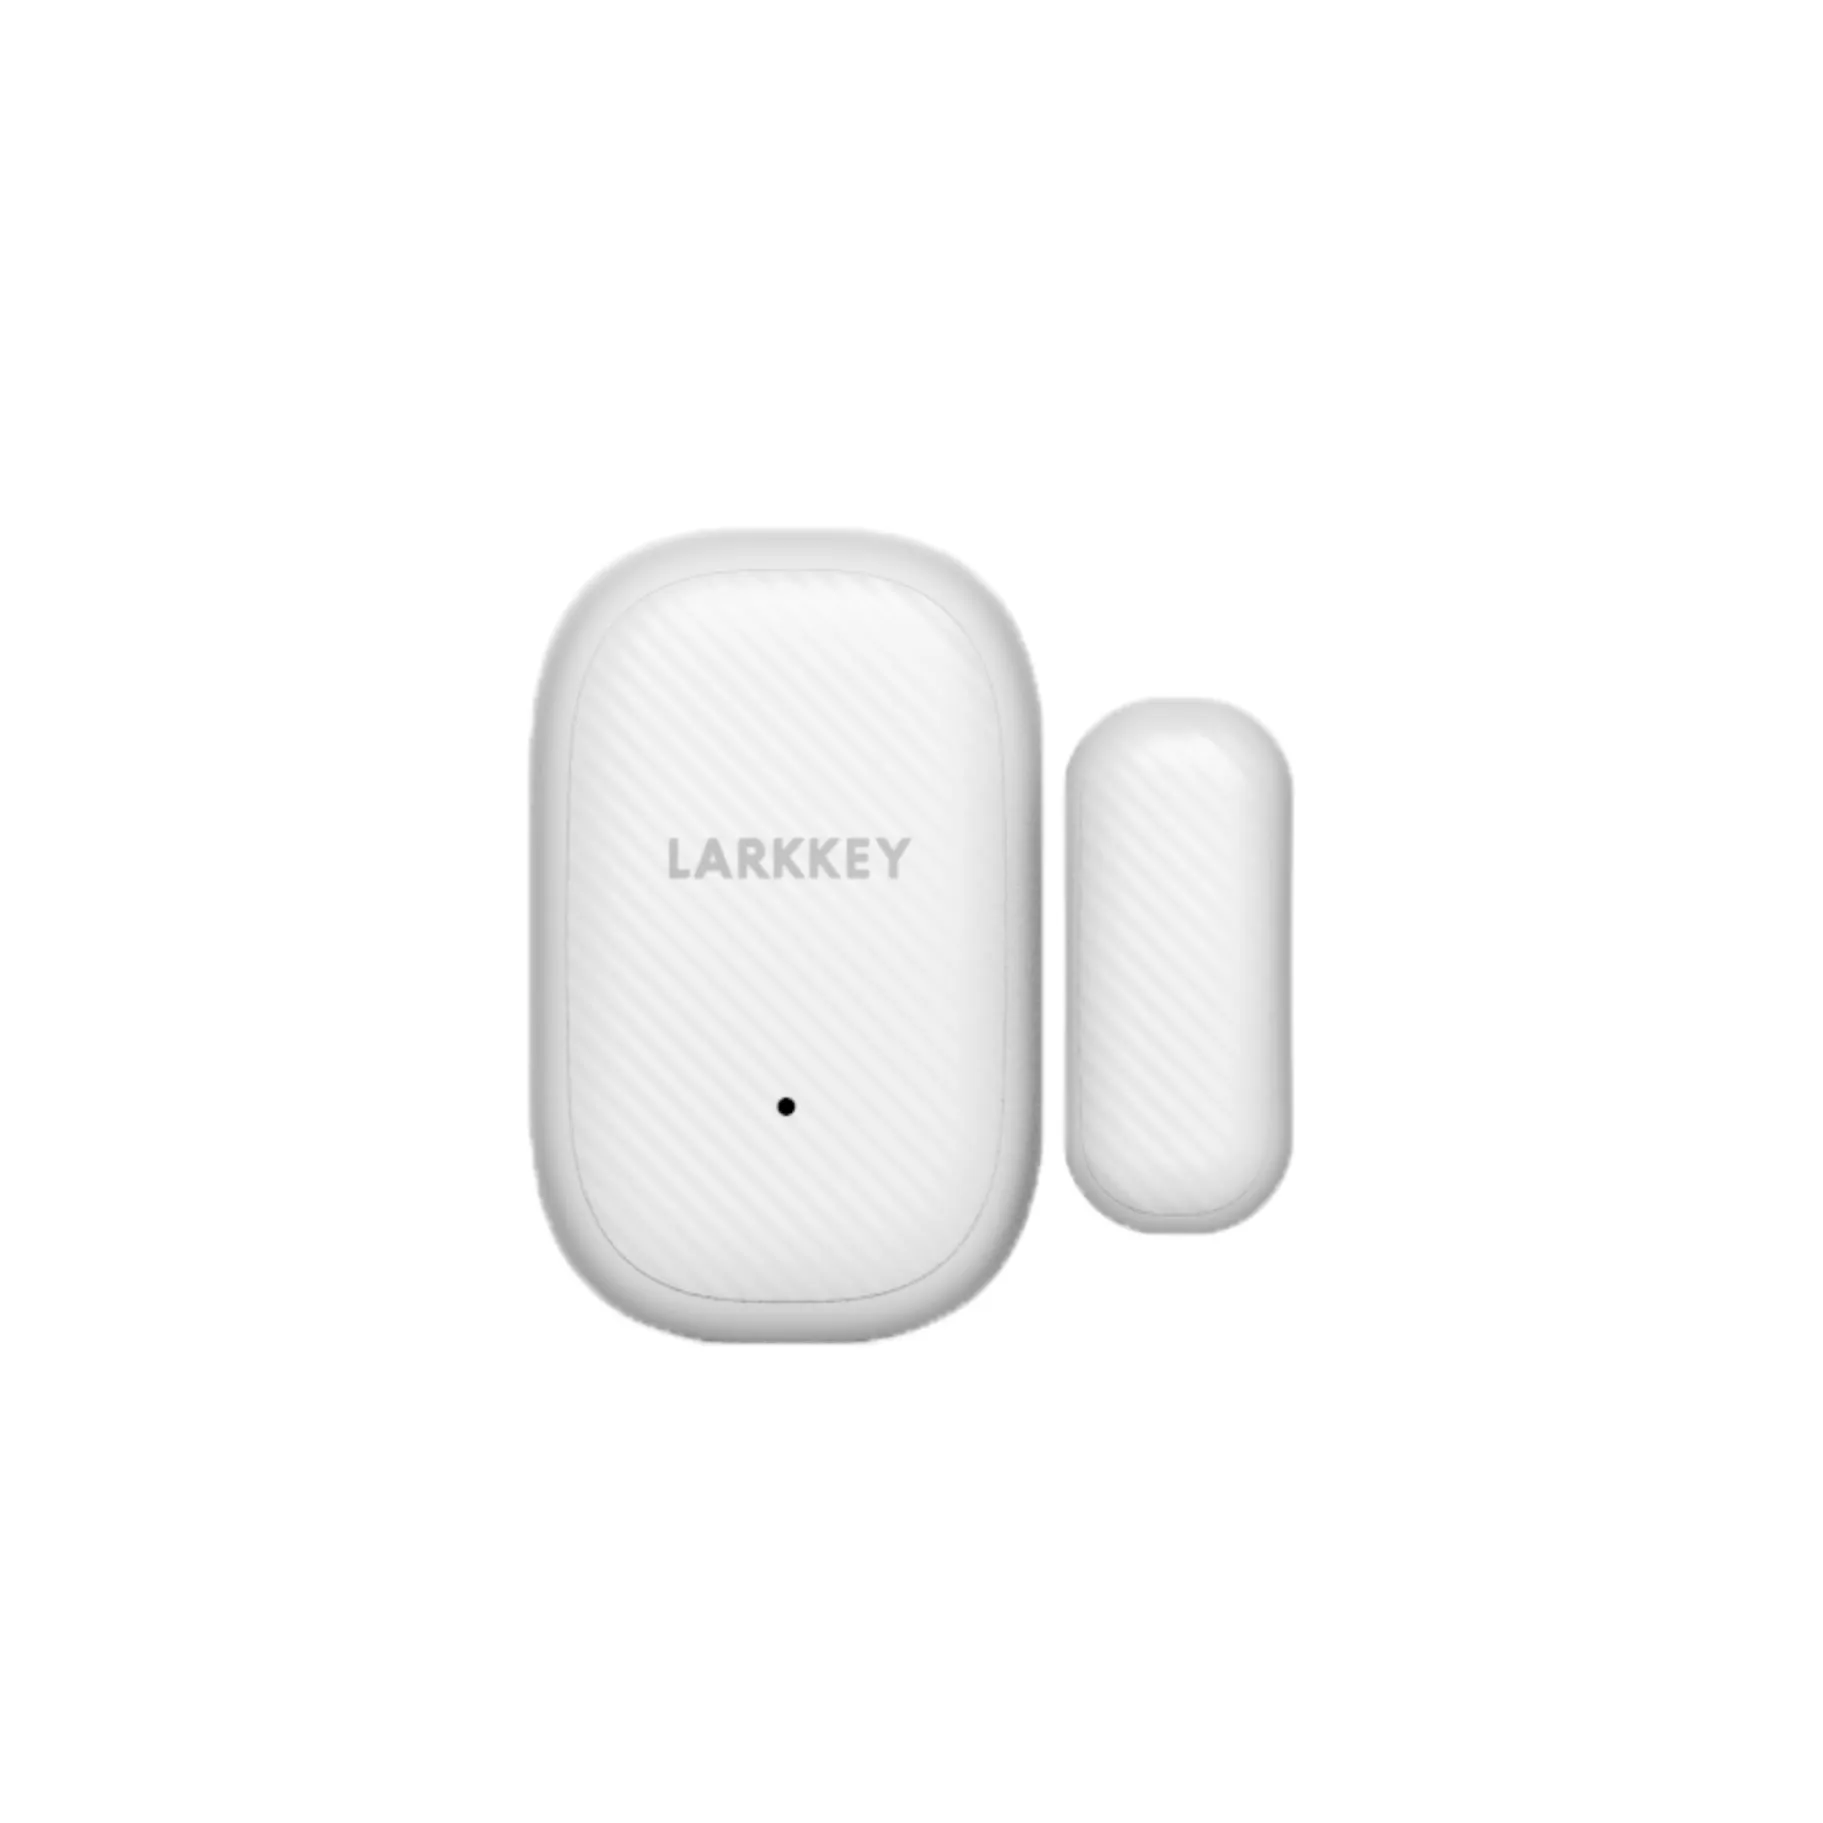 Larkkey Tuya Smart Life wireless security alarm zigbee door and motion sensor